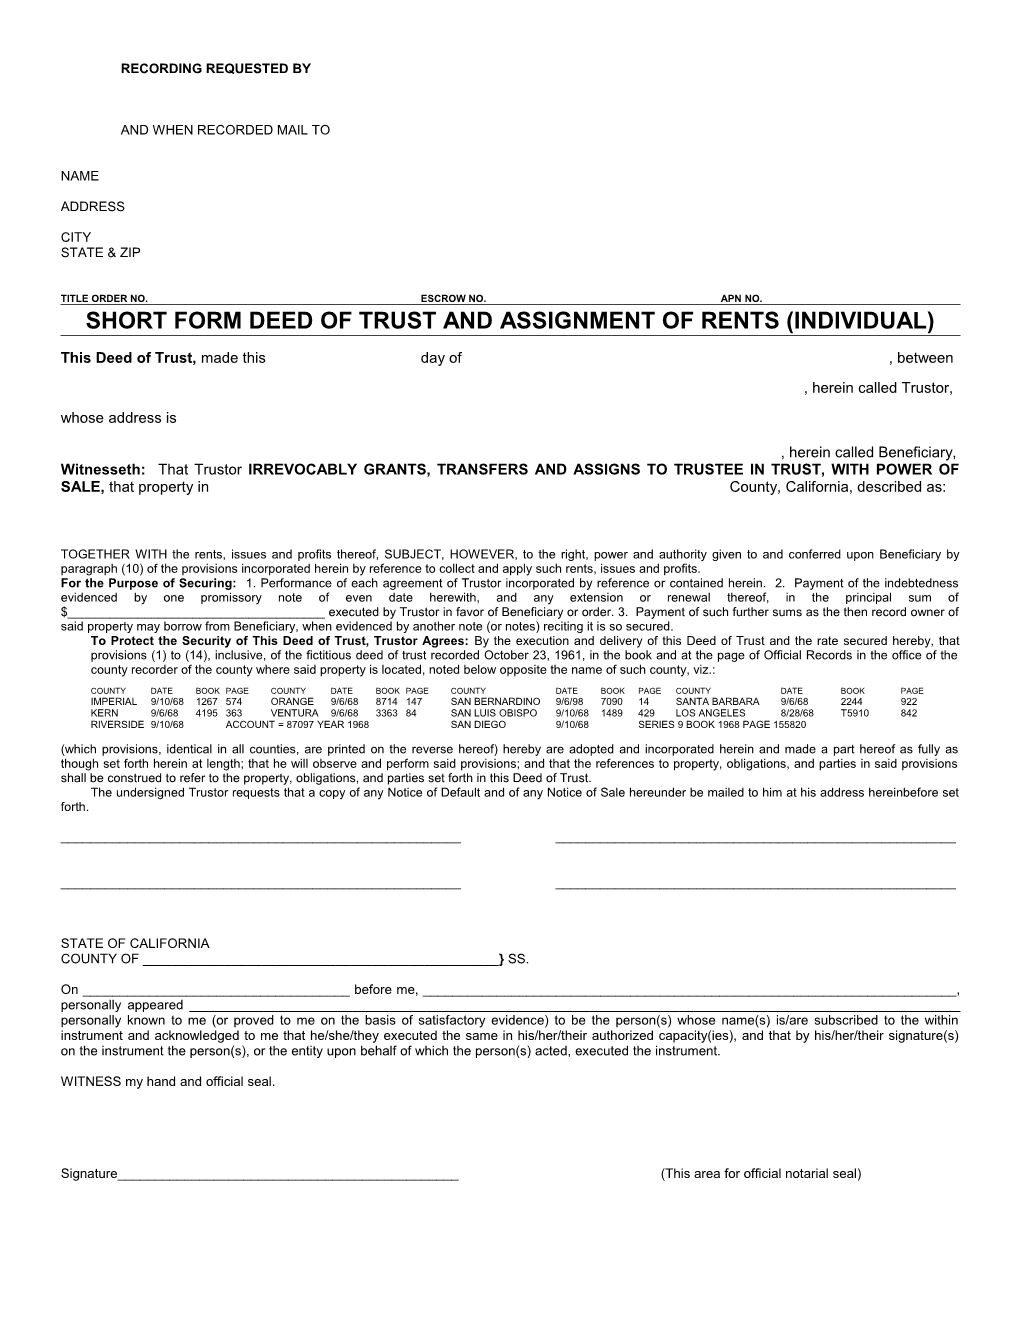 Short Form Deed of Trust & Assgnment of Rents